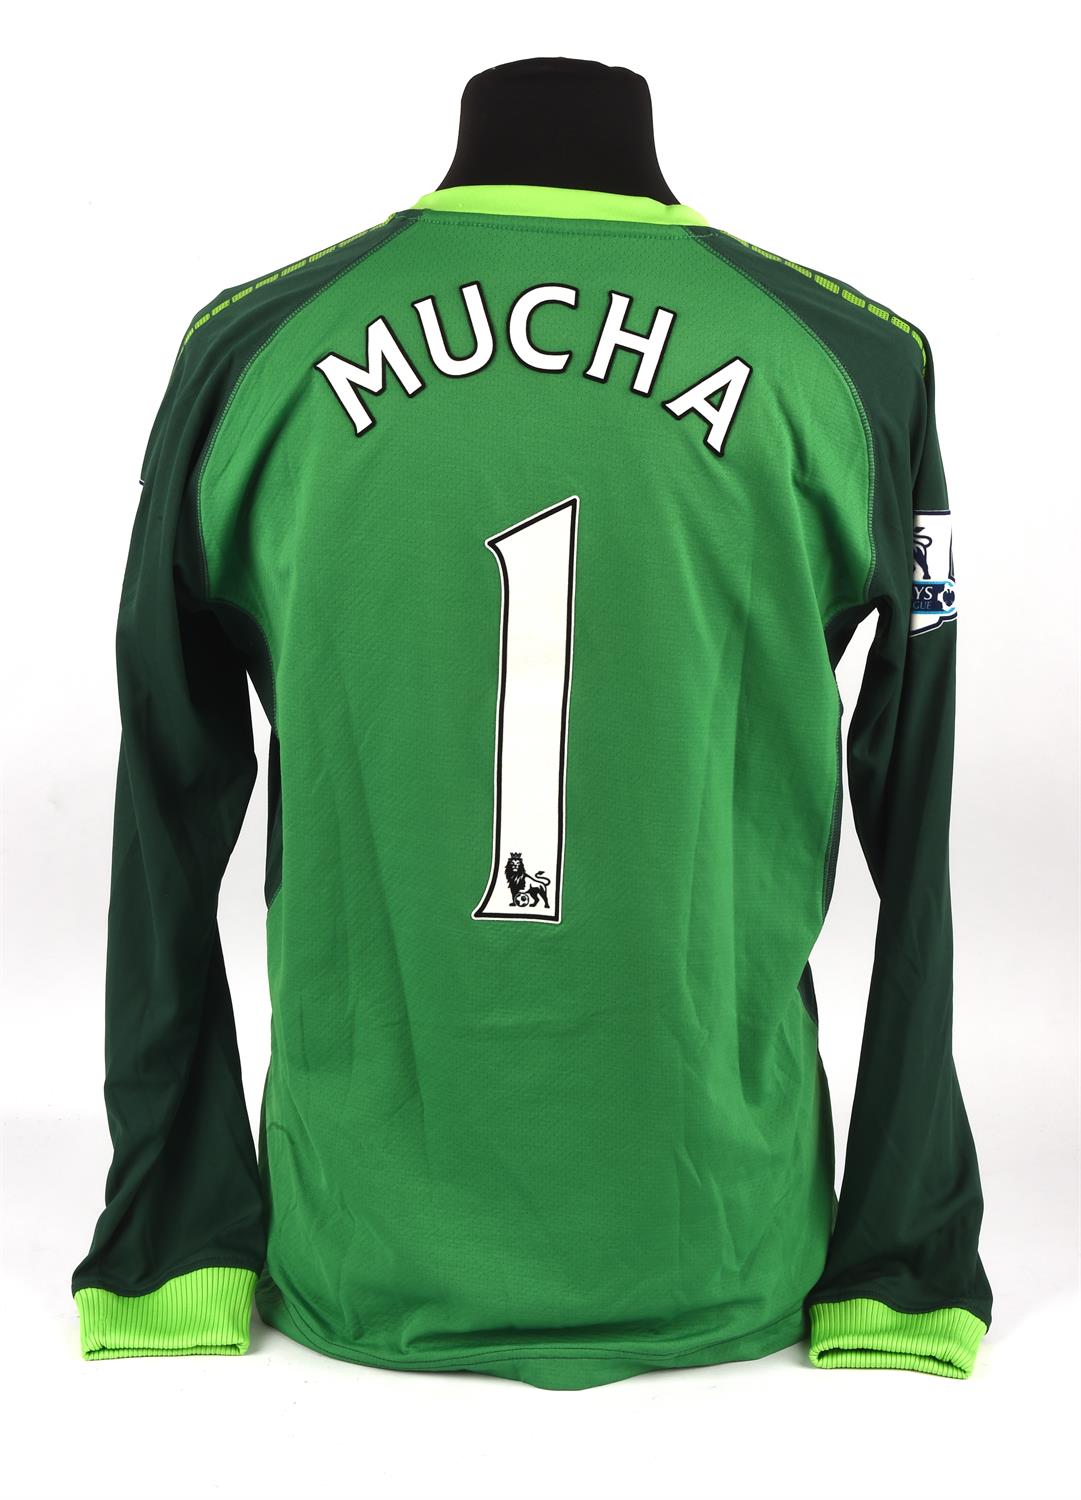 Everton Football club Jan Mucha (No.1) Premier Season shirt from 2010 - 2011, L/S.